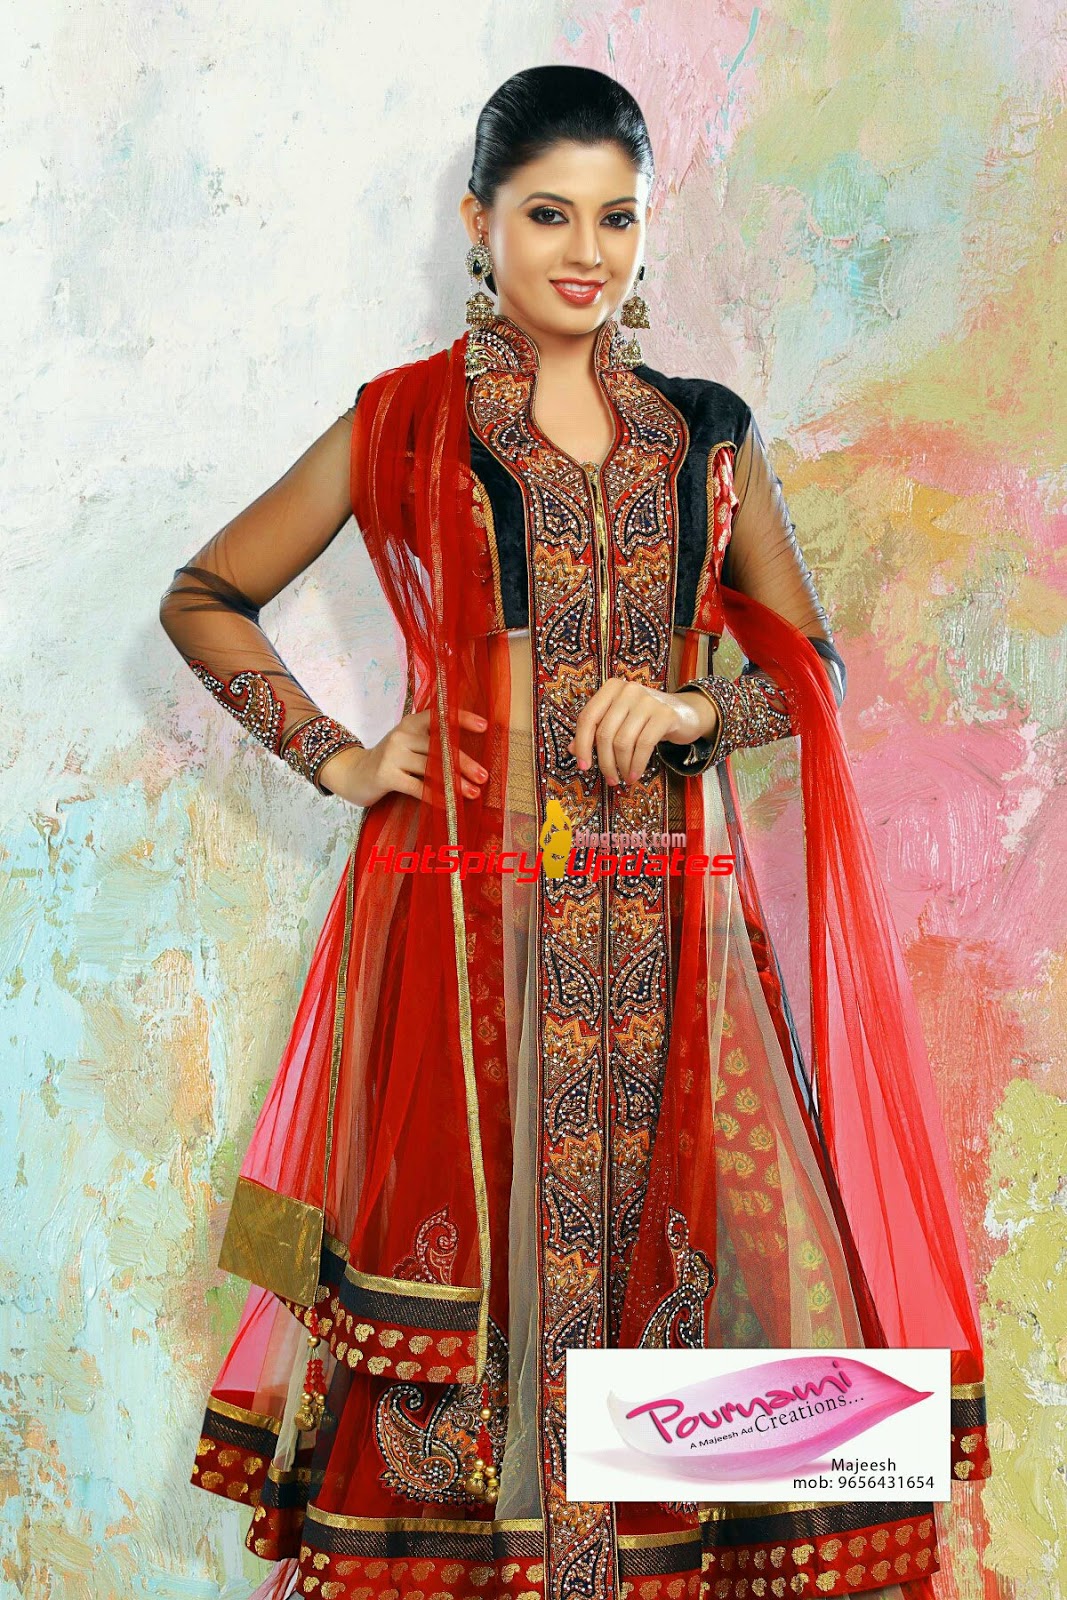 Nimisha Suresh Spicy Hot PhotoShoot Stills | Latest High Quality Images ...